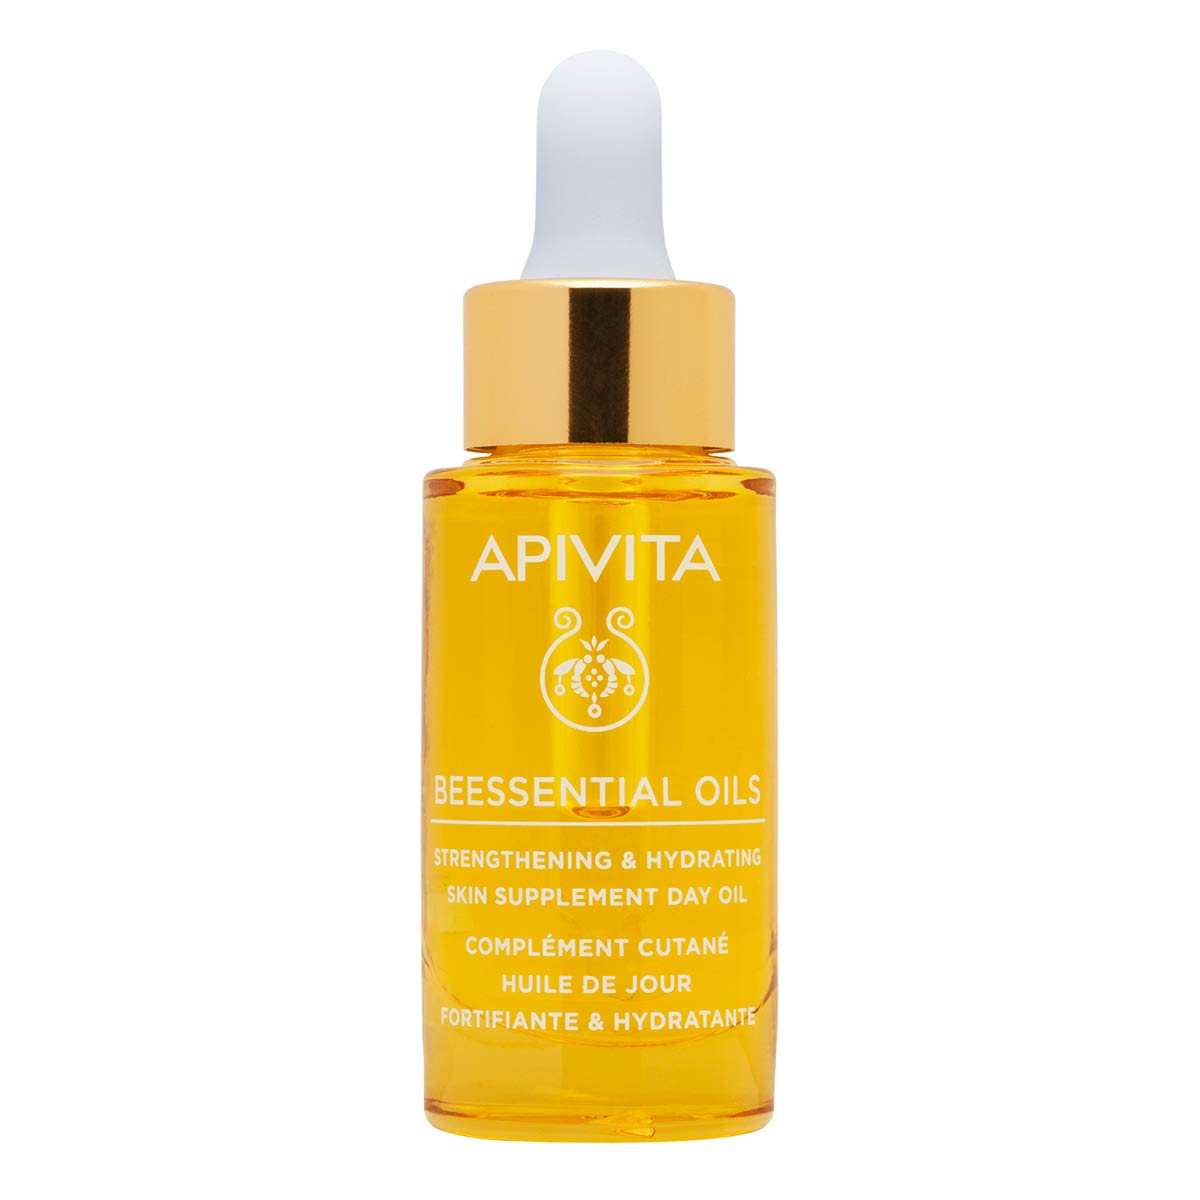 APIVITA BEESSENTIAL OILS Strengthening & Hydrating Skin Supplement Day Oil 15ml